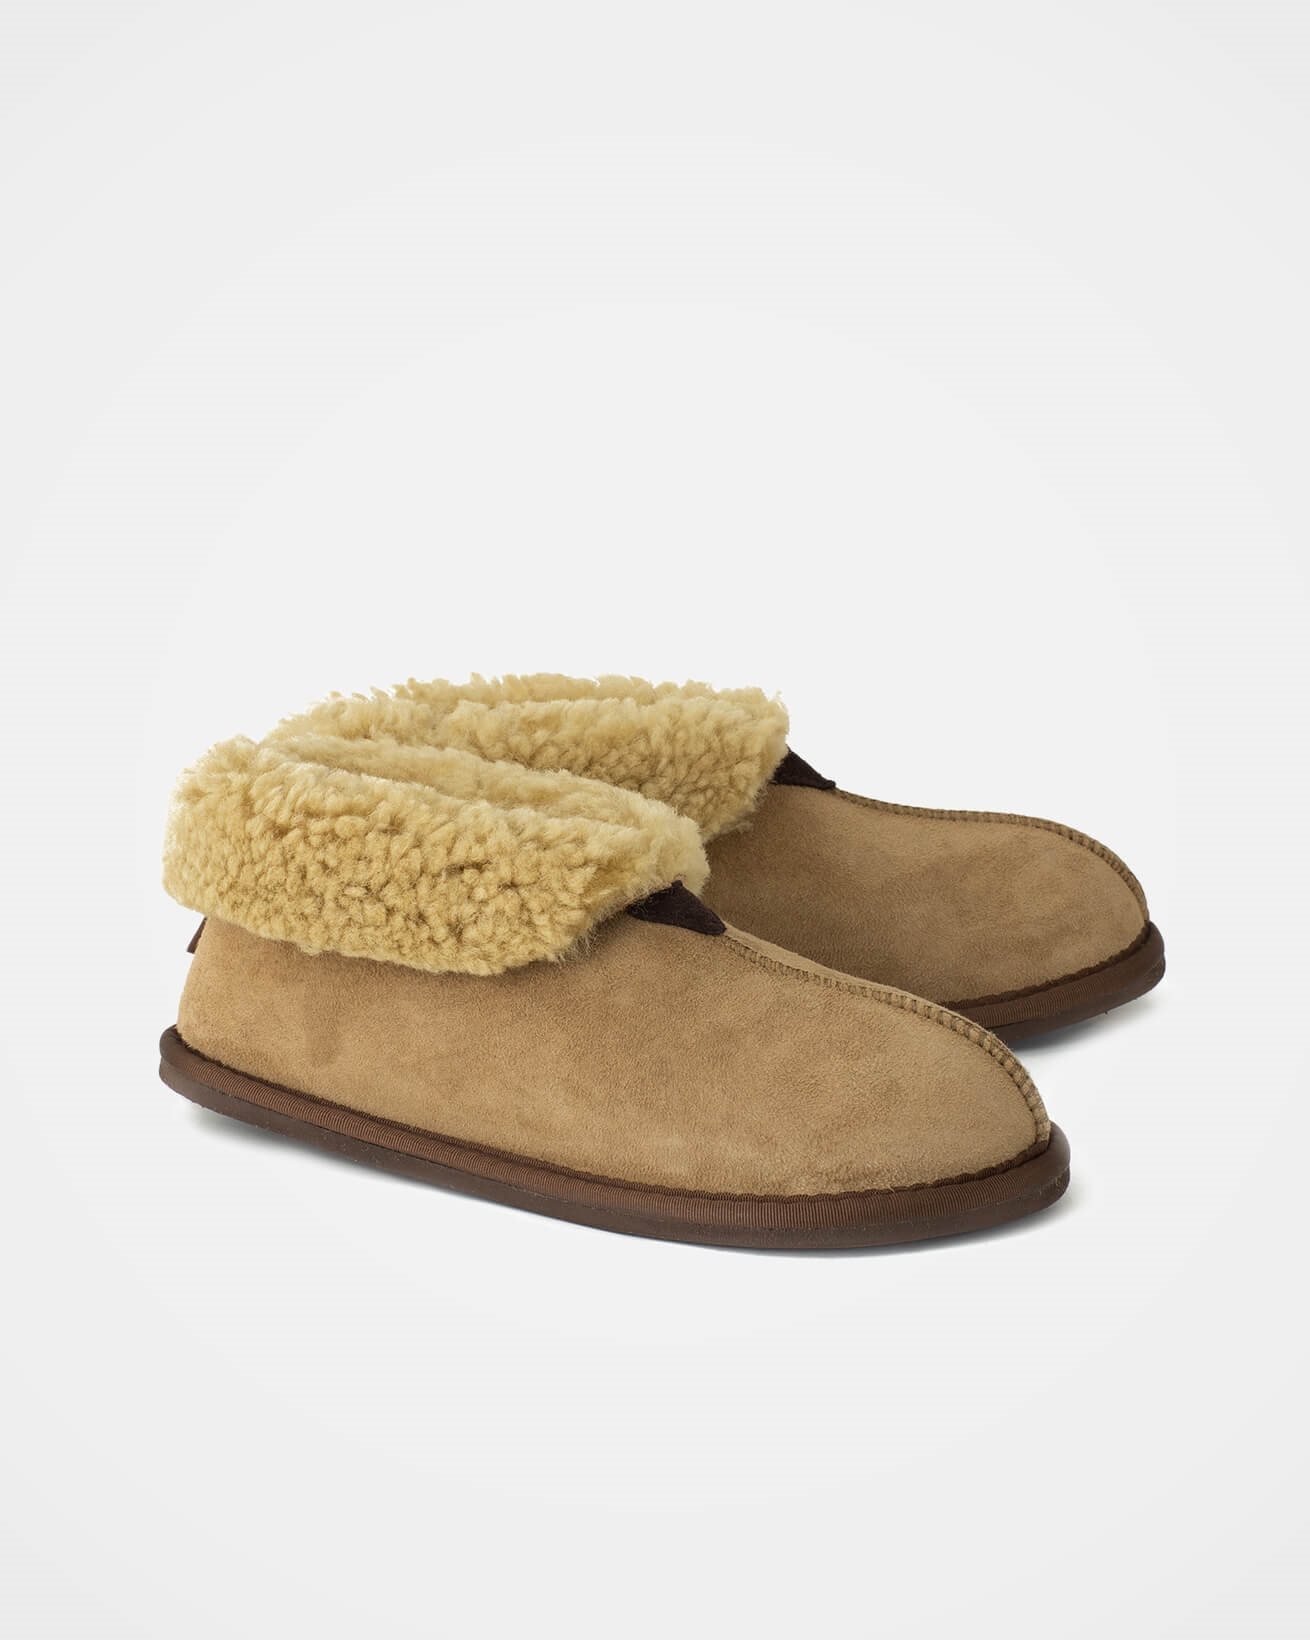 sheepskin slippers size 5